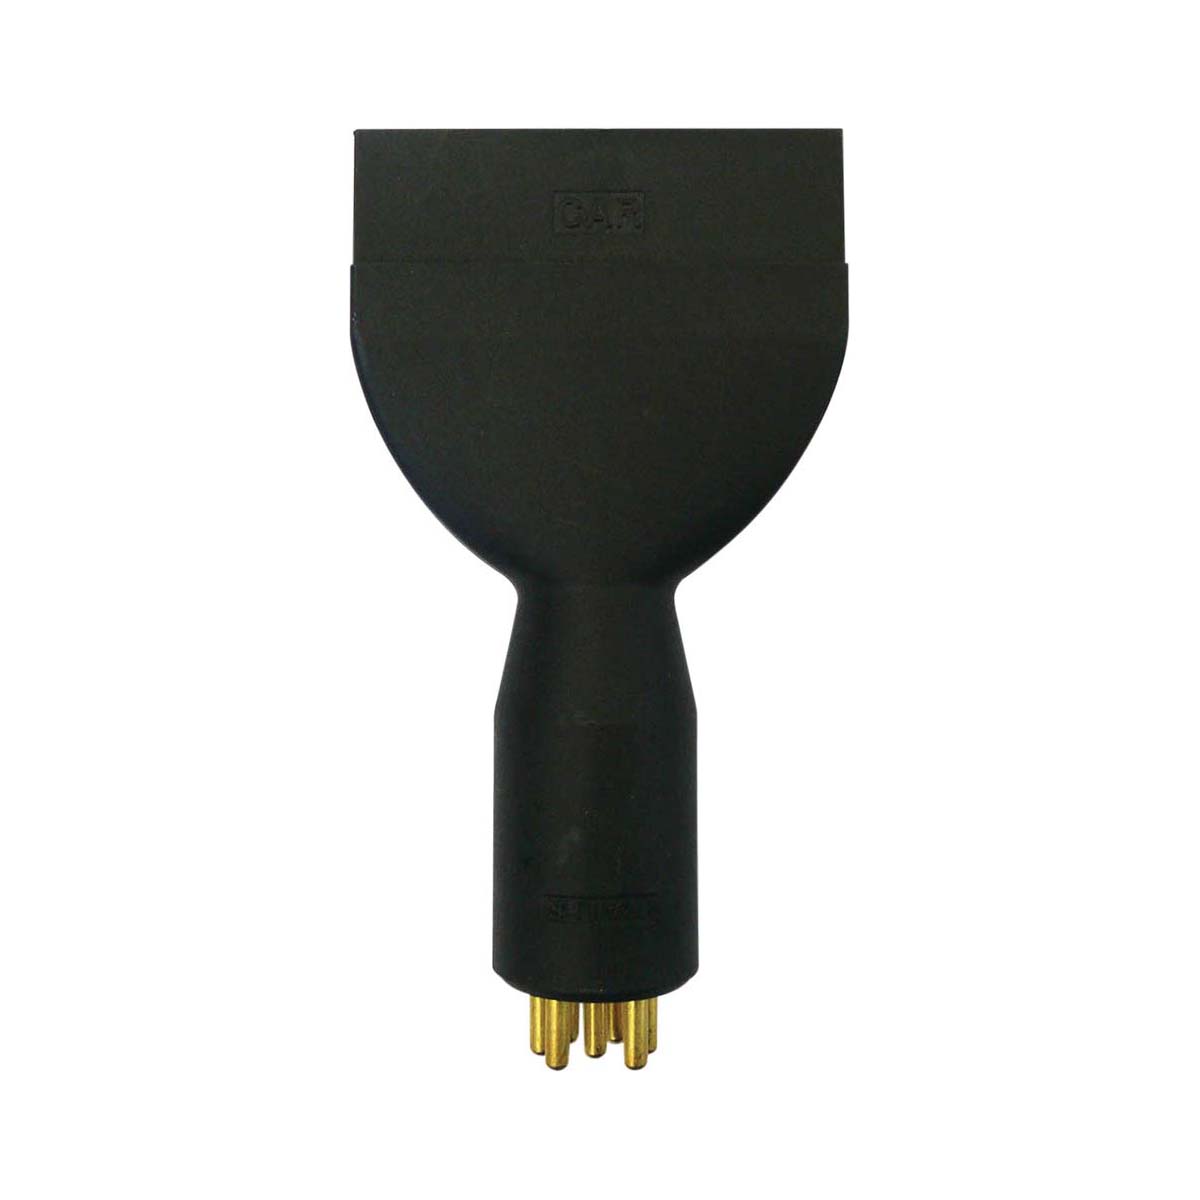 Blueline 7 Pin Trailer Adaptor - Flat Socket to Small Round Plug